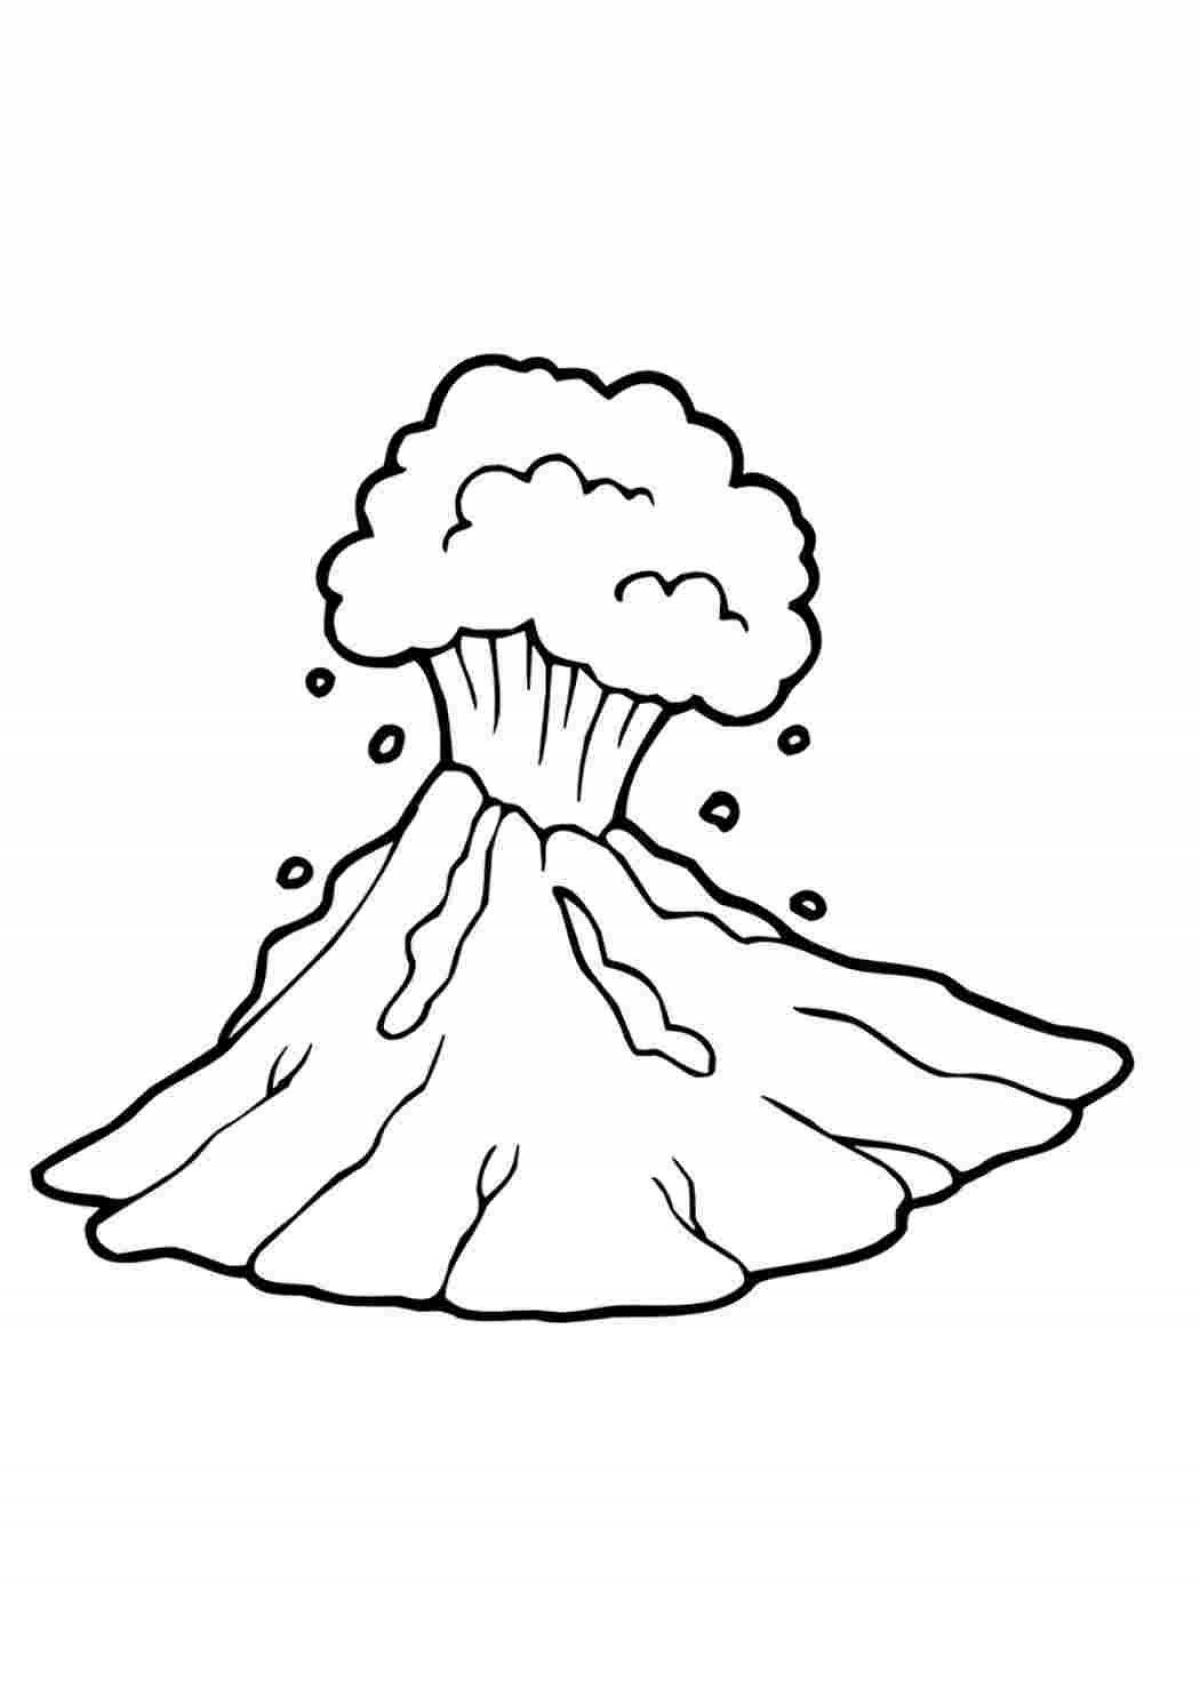 Раскраска лава лава а4. Вулкан раскраска. Вулкан рисунок. Вулкан раскраска для детей. Рисование с дошкольниками вулкан.